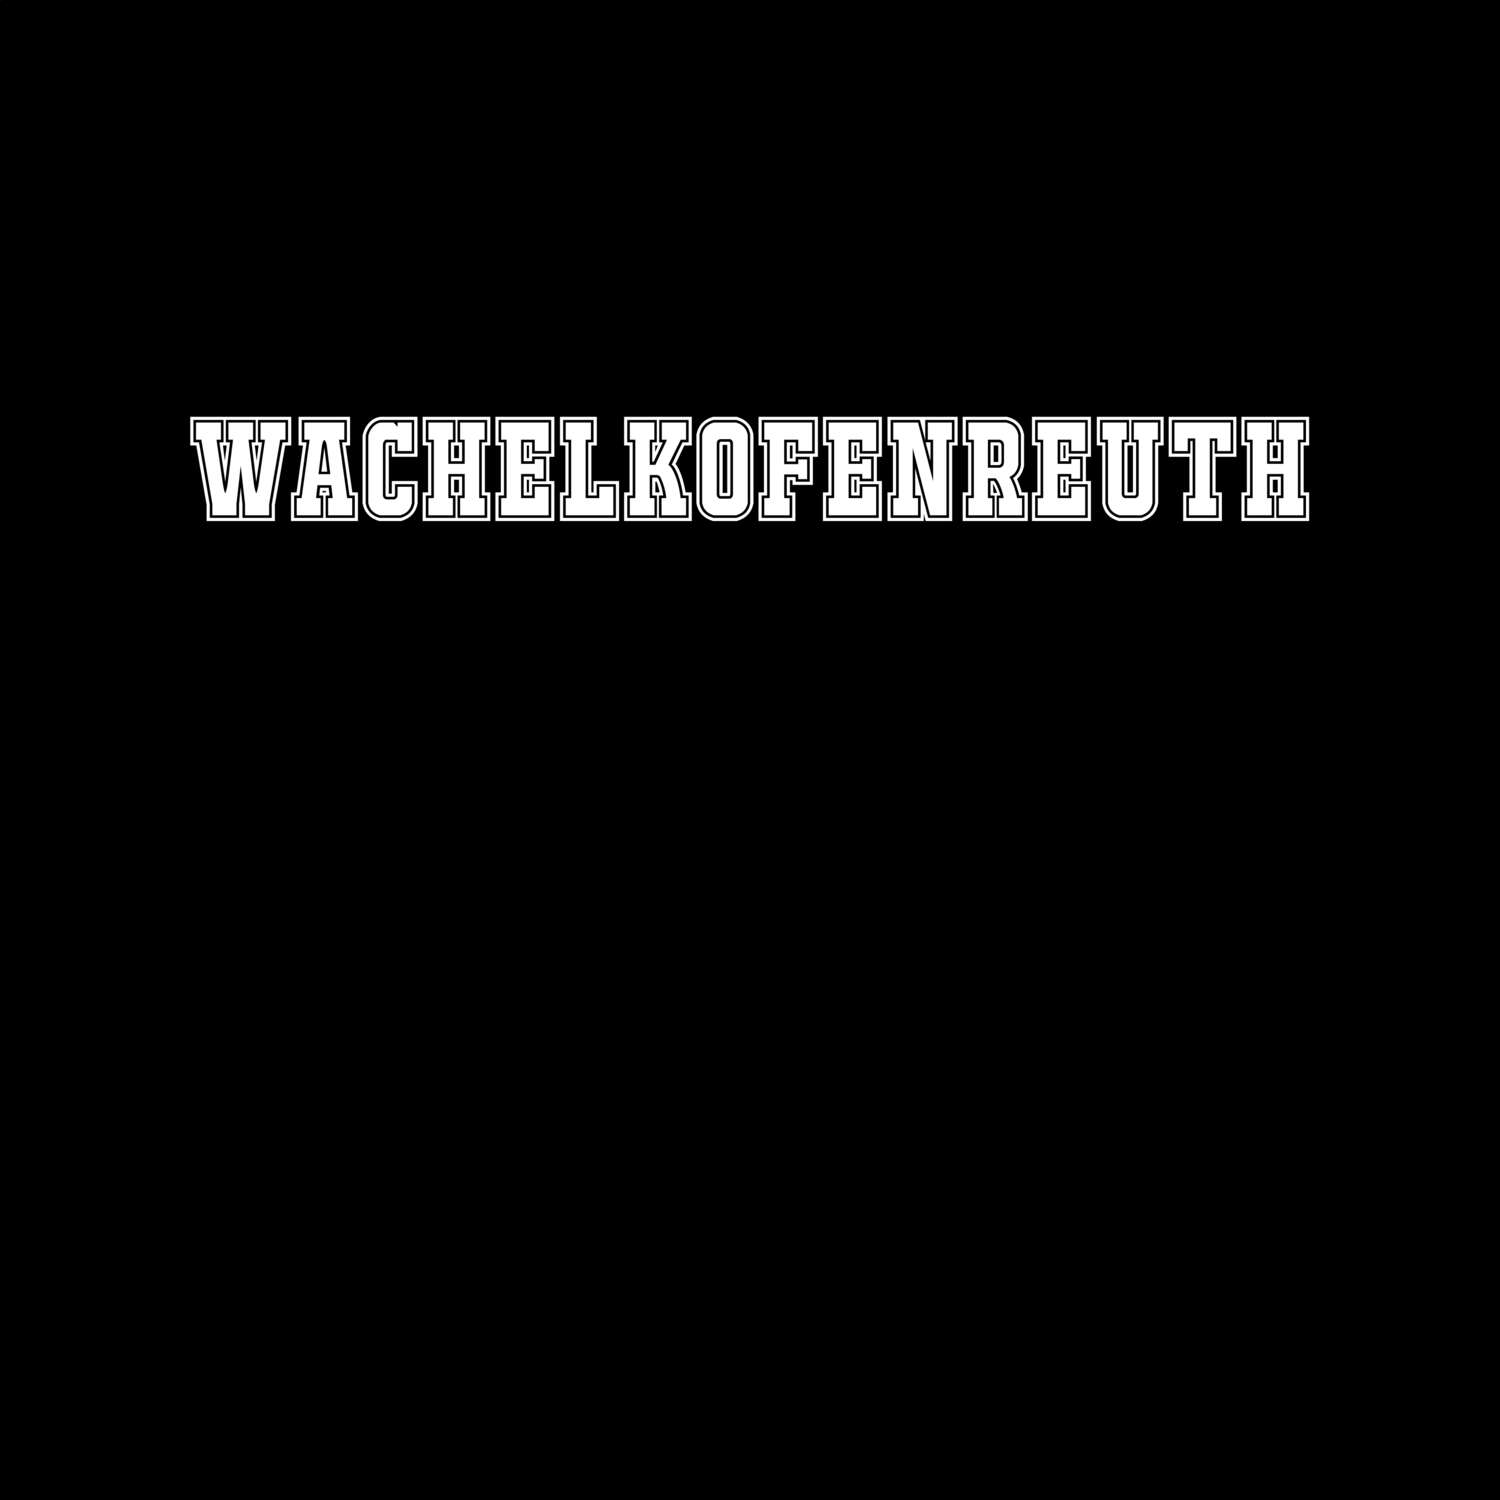 Wachelkofenreuth T-Shirt »Classic«